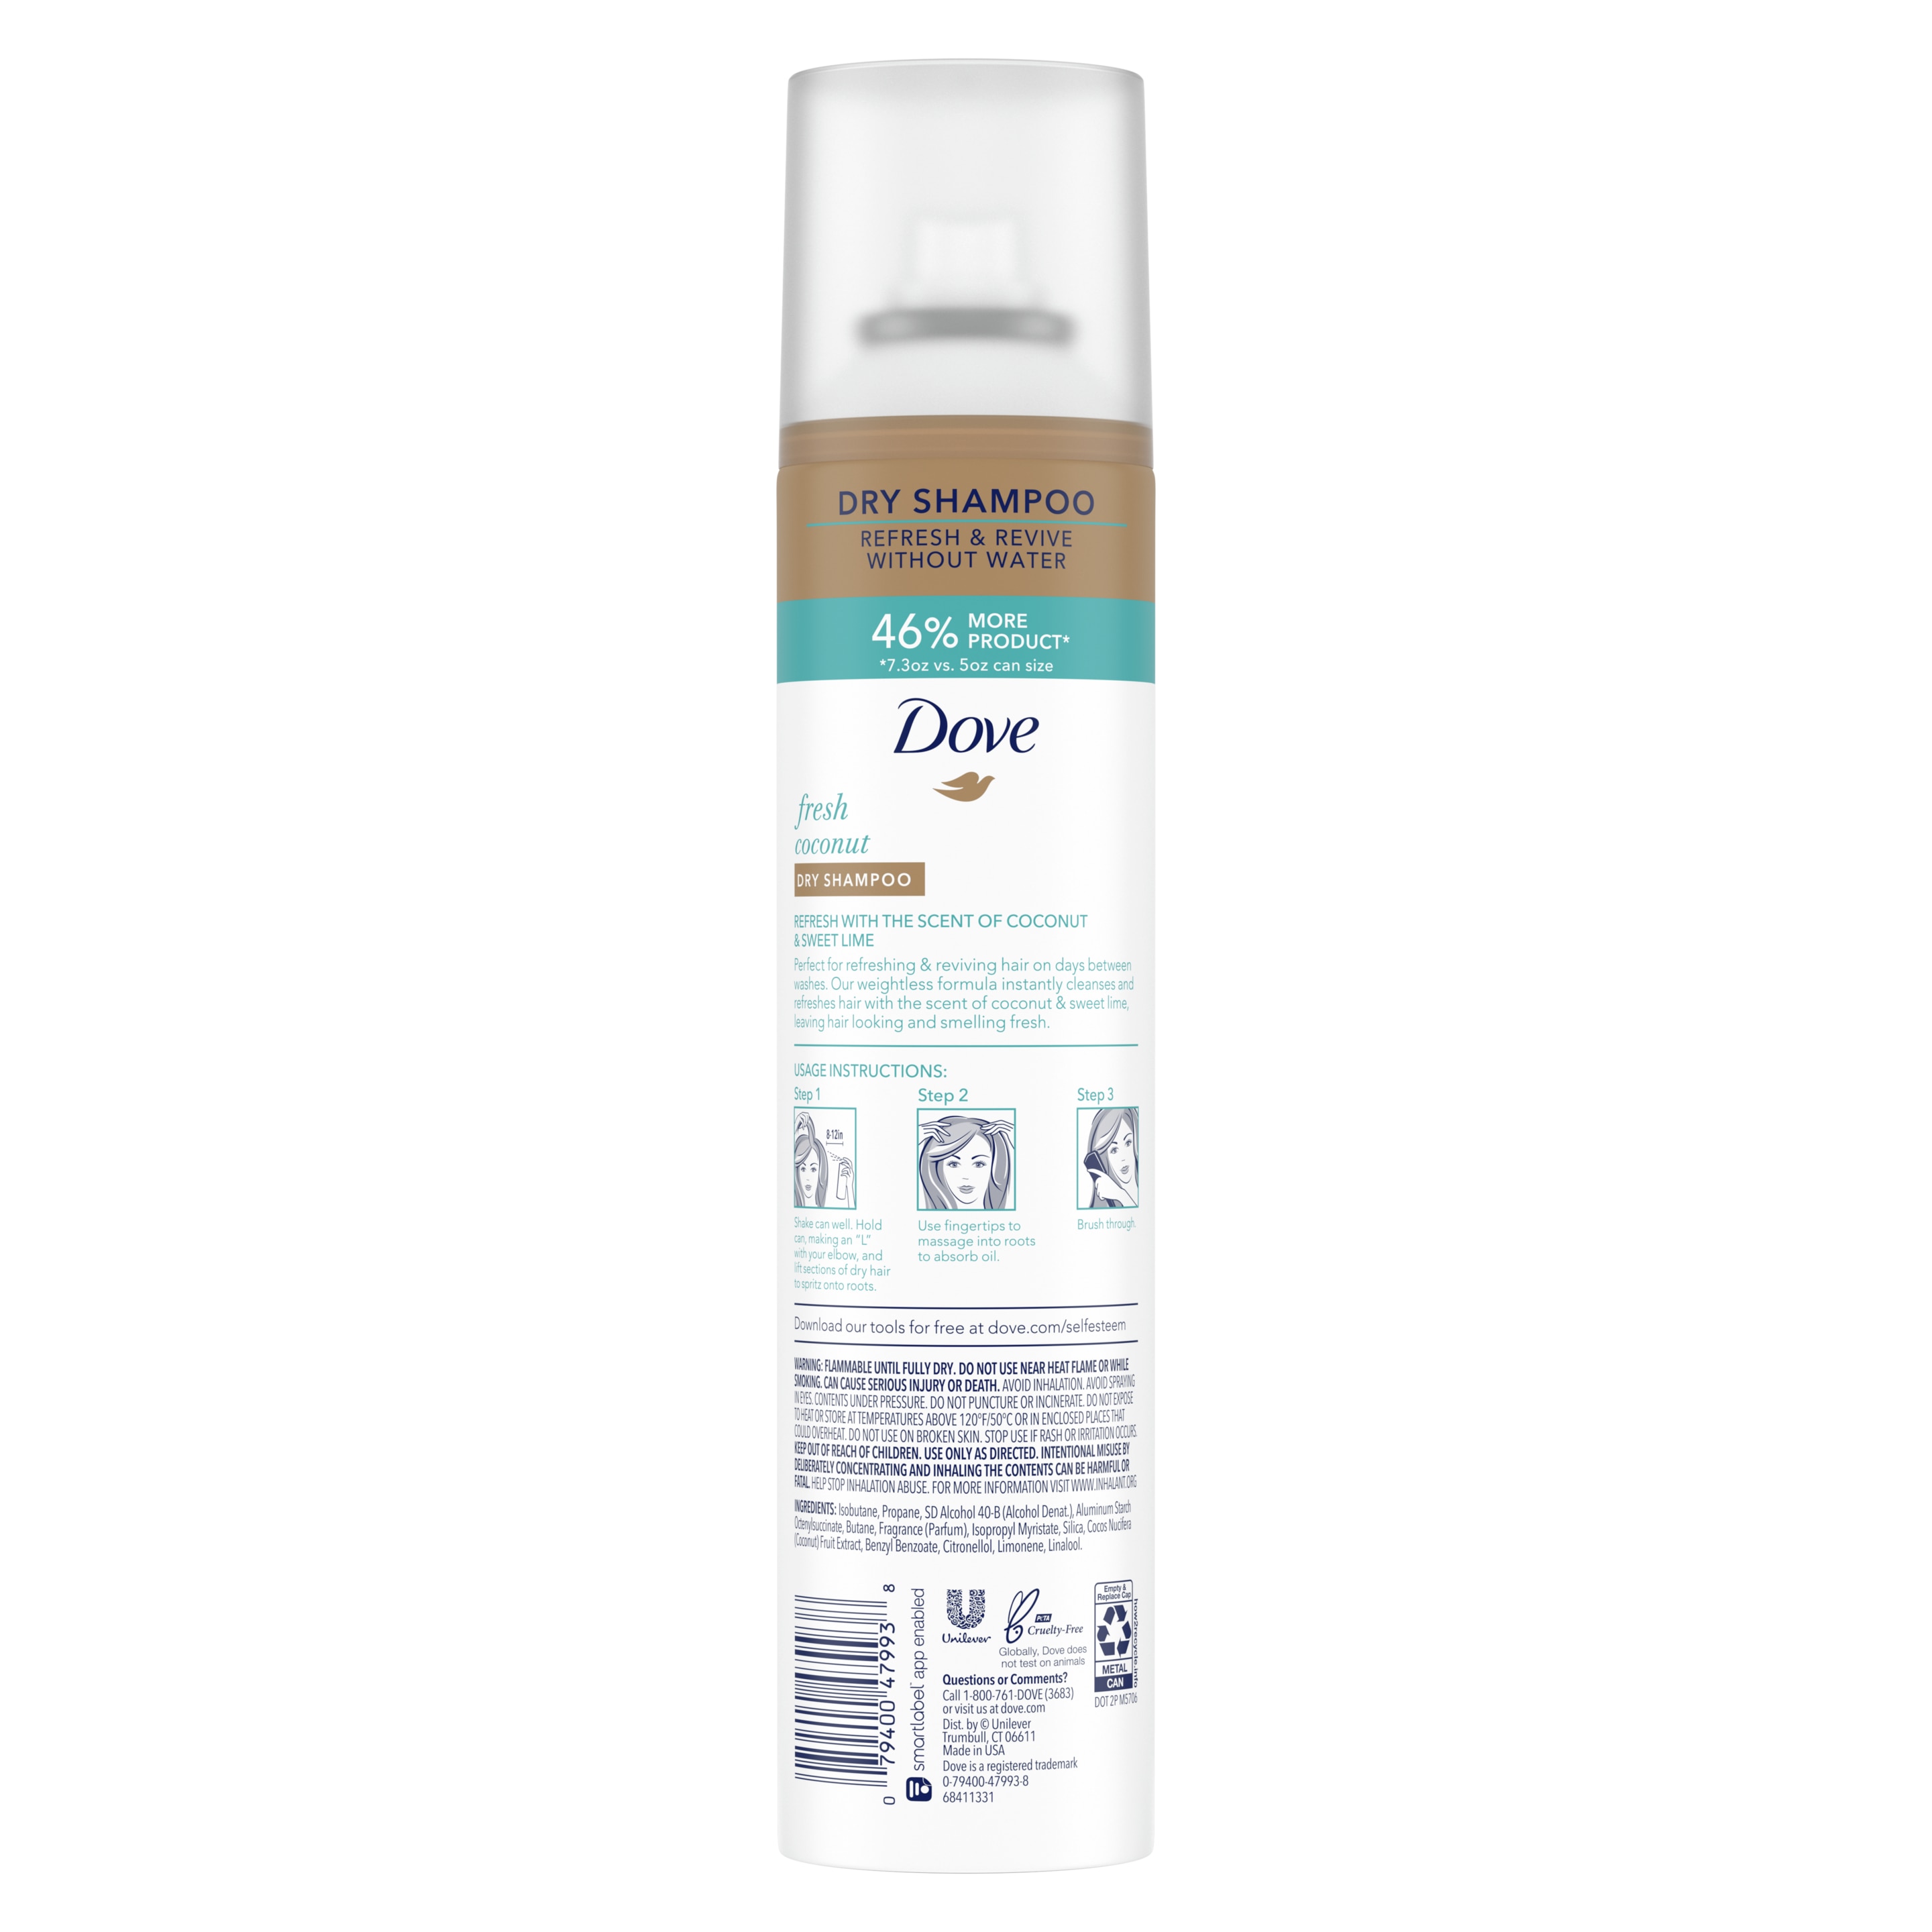 Dove Refresh+Care Fresh Coconut Dry Shampoo 7.3oz